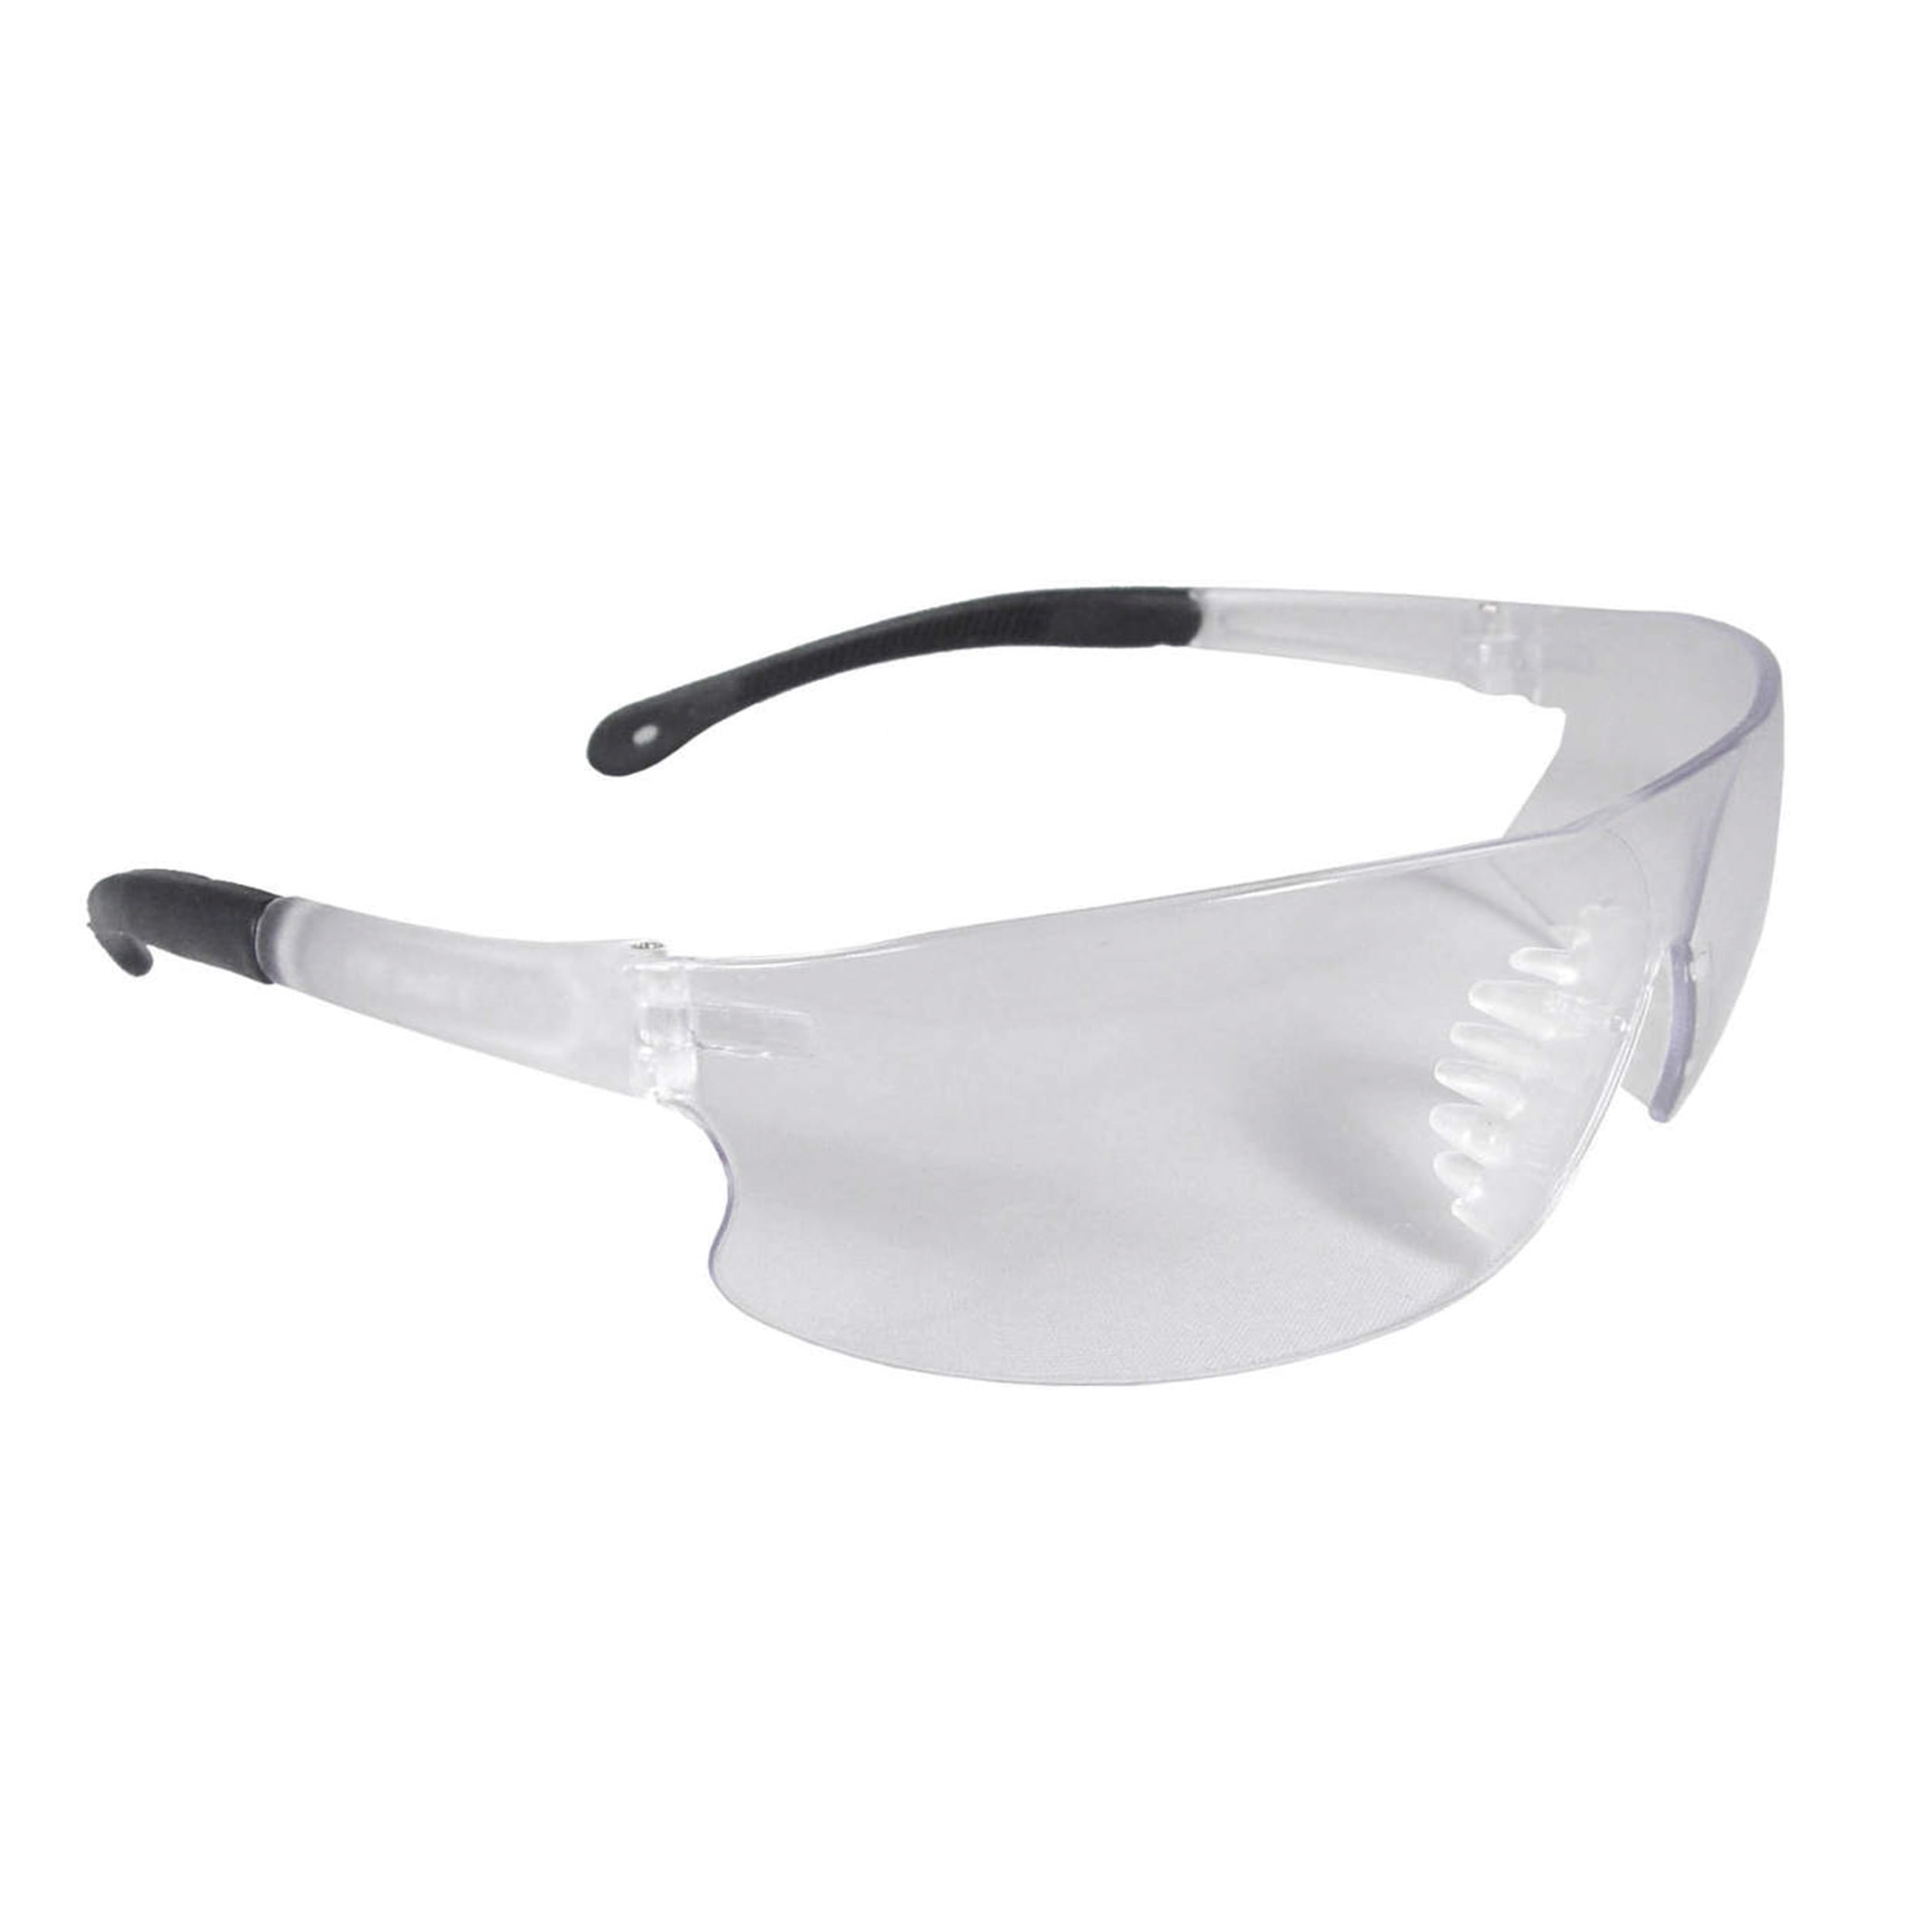 3 Pair/Pack Radians Rad Sequel Clear Lens Safety Glasses Gel Nose Pad Z87+ 